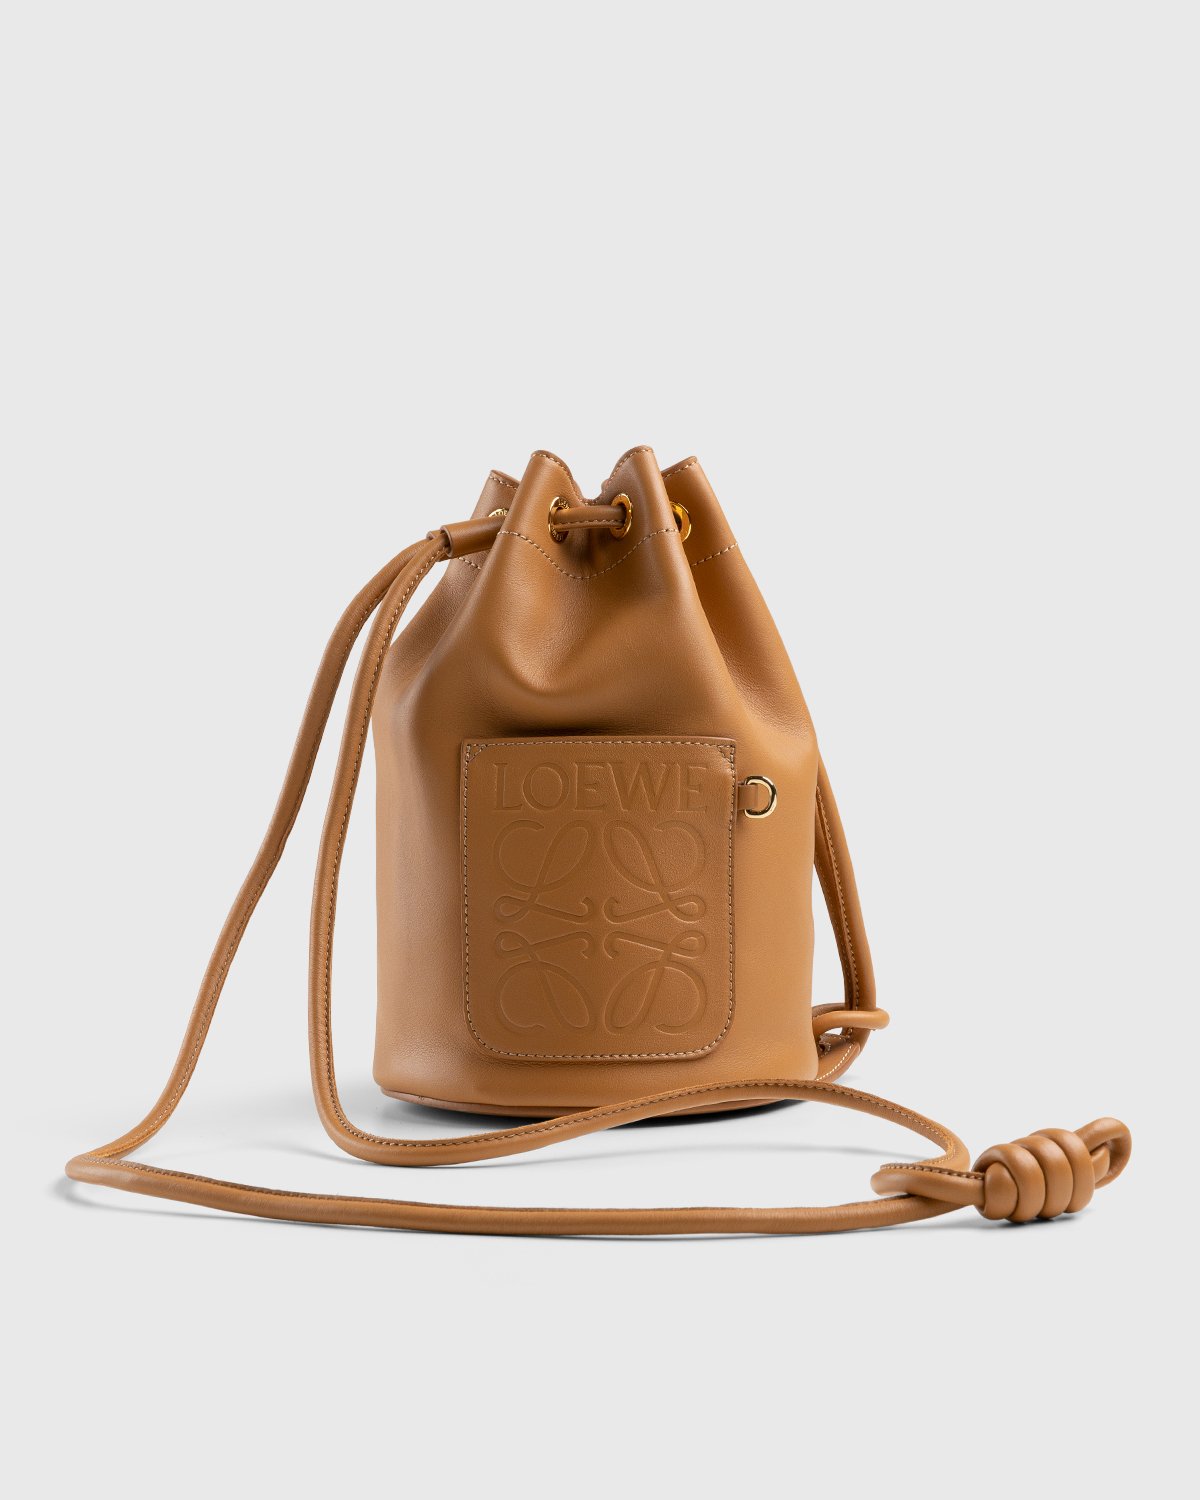 Loewe - Paula's Ibiza Sailor Small Bag Warm Desert - Accessories - Brown - Image 1